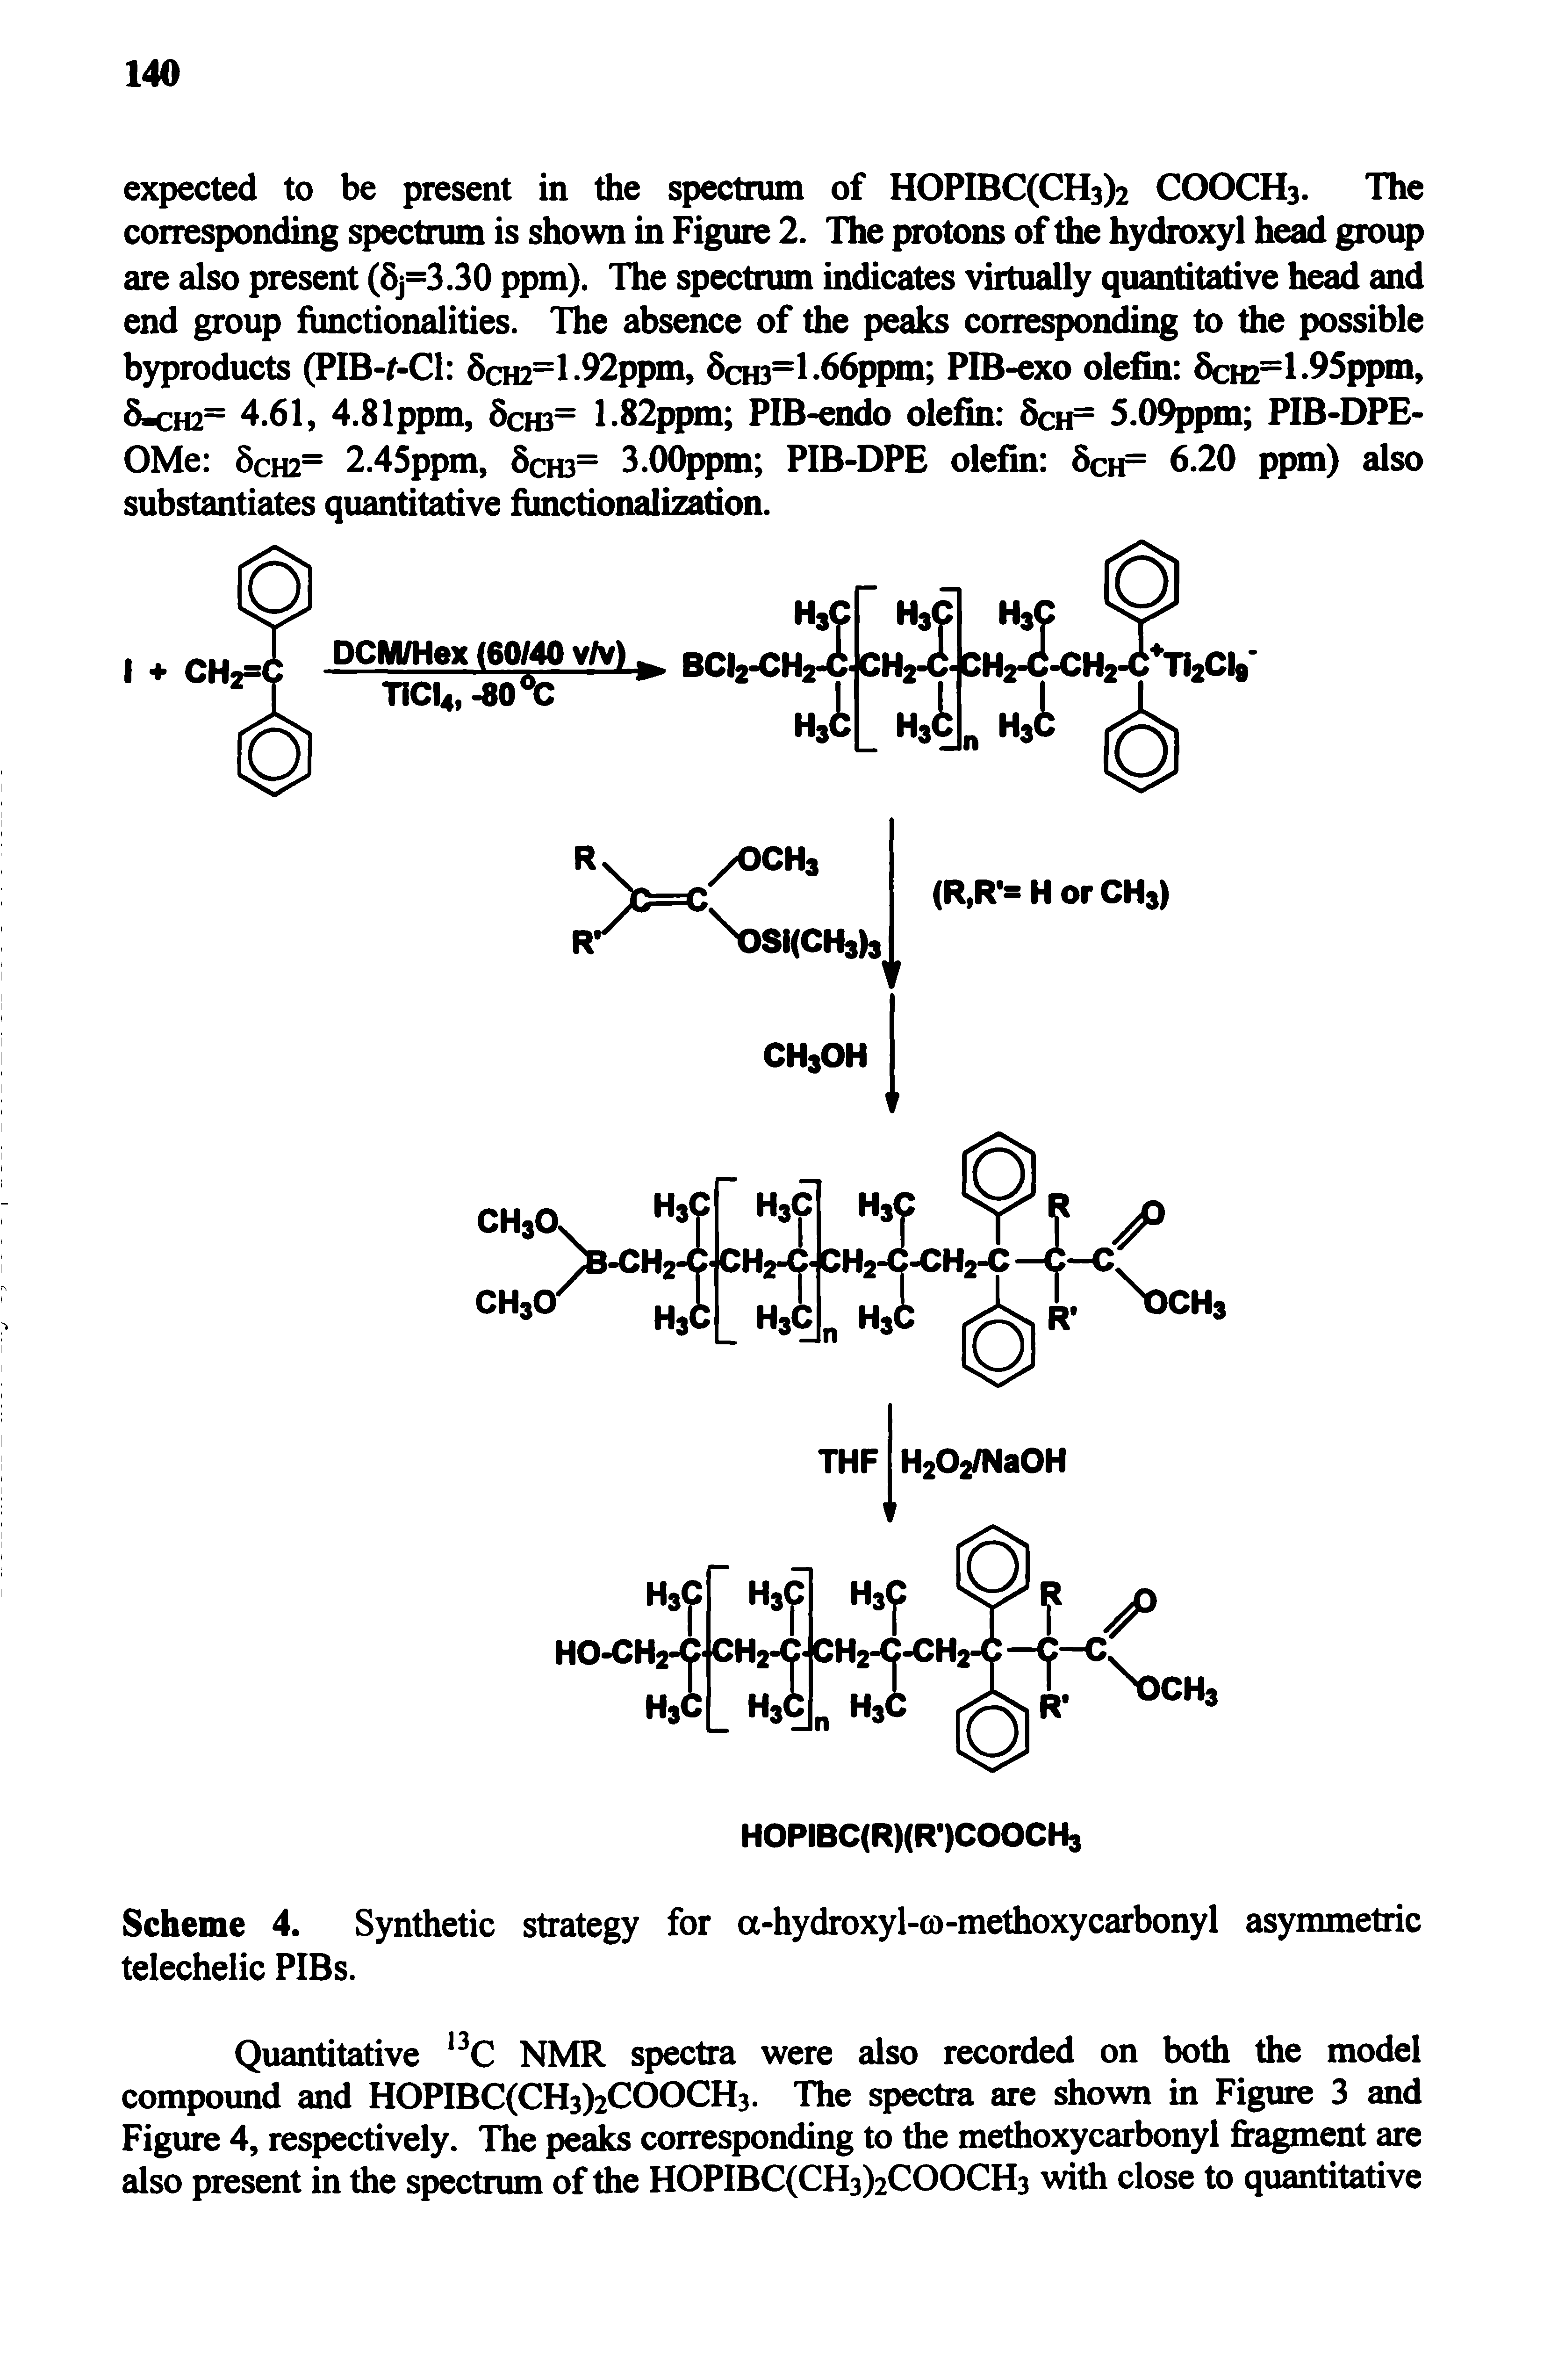 Scheme 4. Synthetic strategy for a-hydroxyl-o)-methoxycarbonyl asymmetric telechelic PIBs.